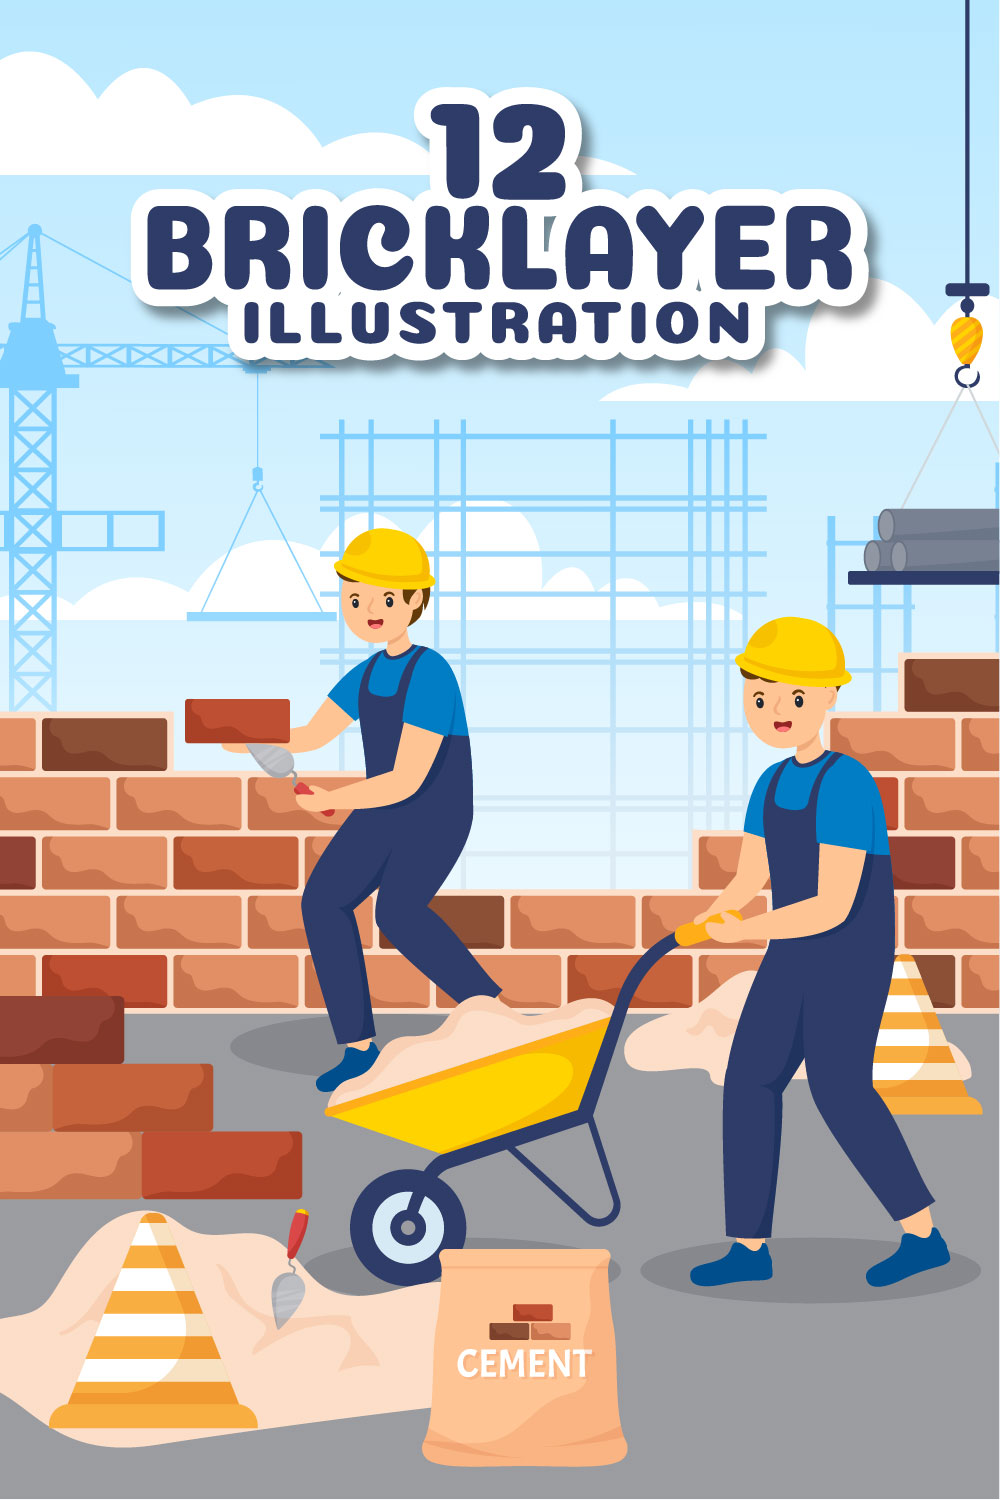 12 Bricklayer Worker Illustration pinterest preview image.